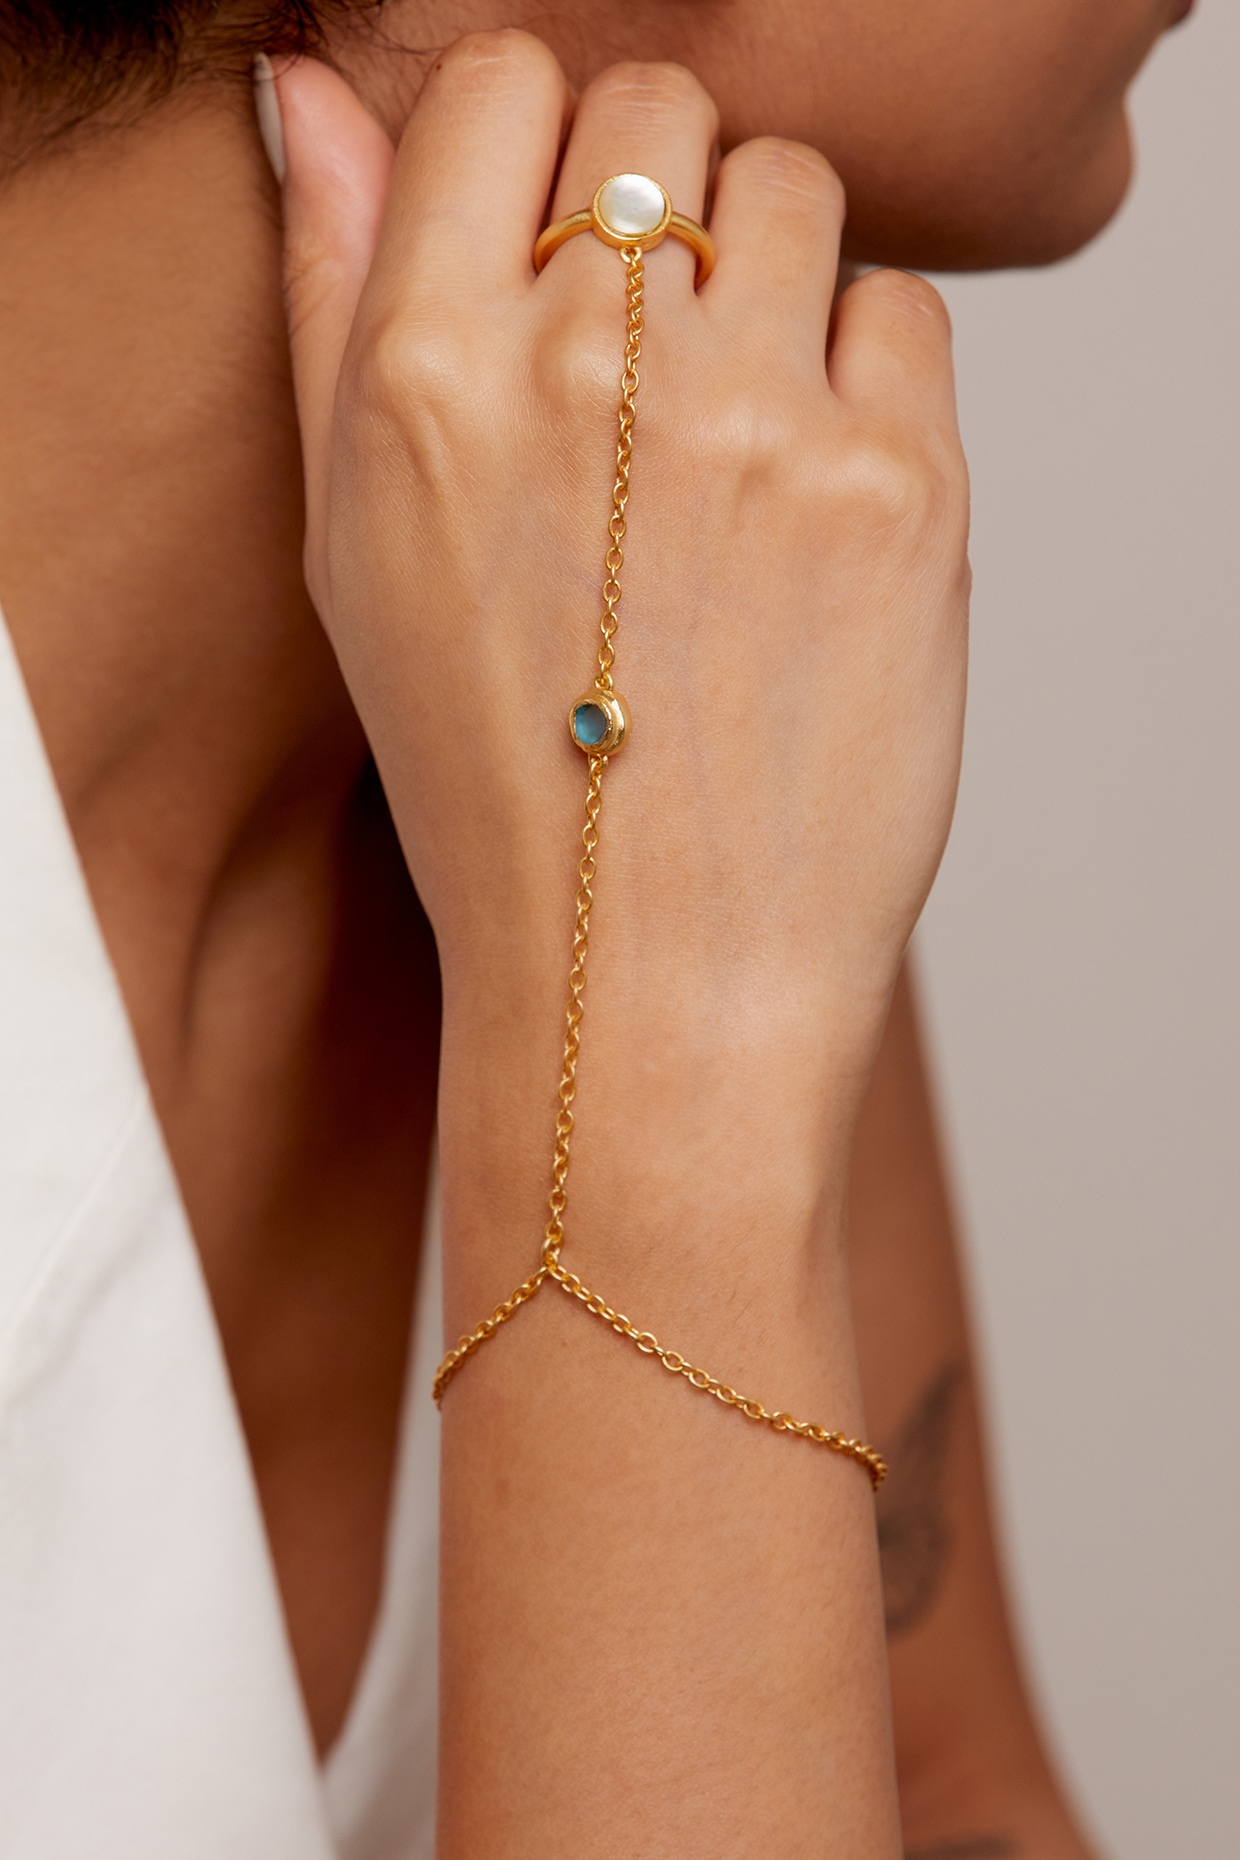 5 Popular Designs in Ring Bracelets for Girls You Must Have – Blingvine